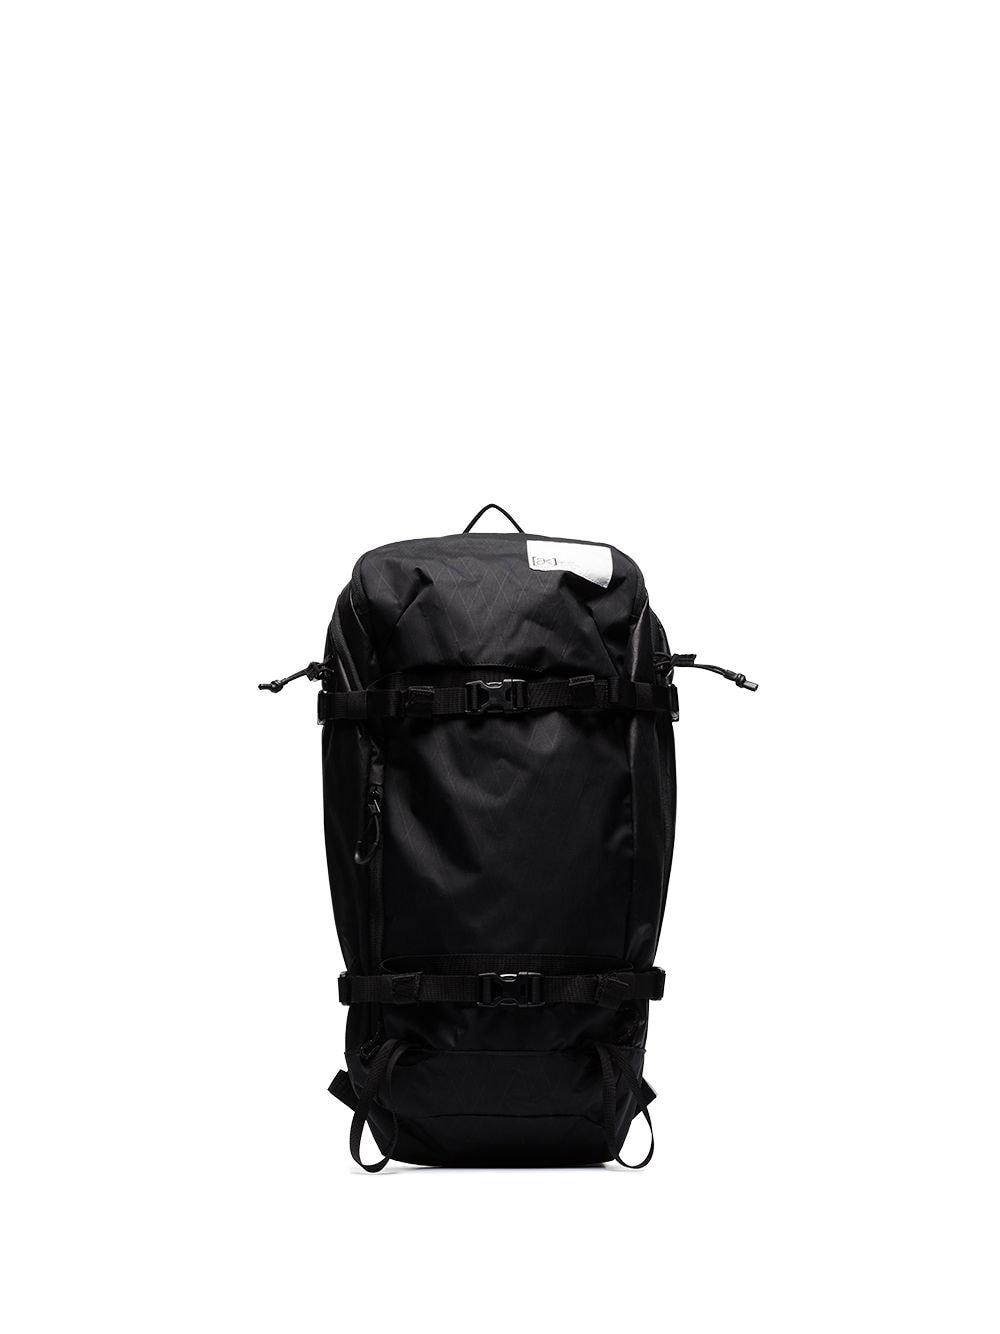 Burton Ak Synthetic Japan Jet 15l Backpack in Black for Men - Lyst